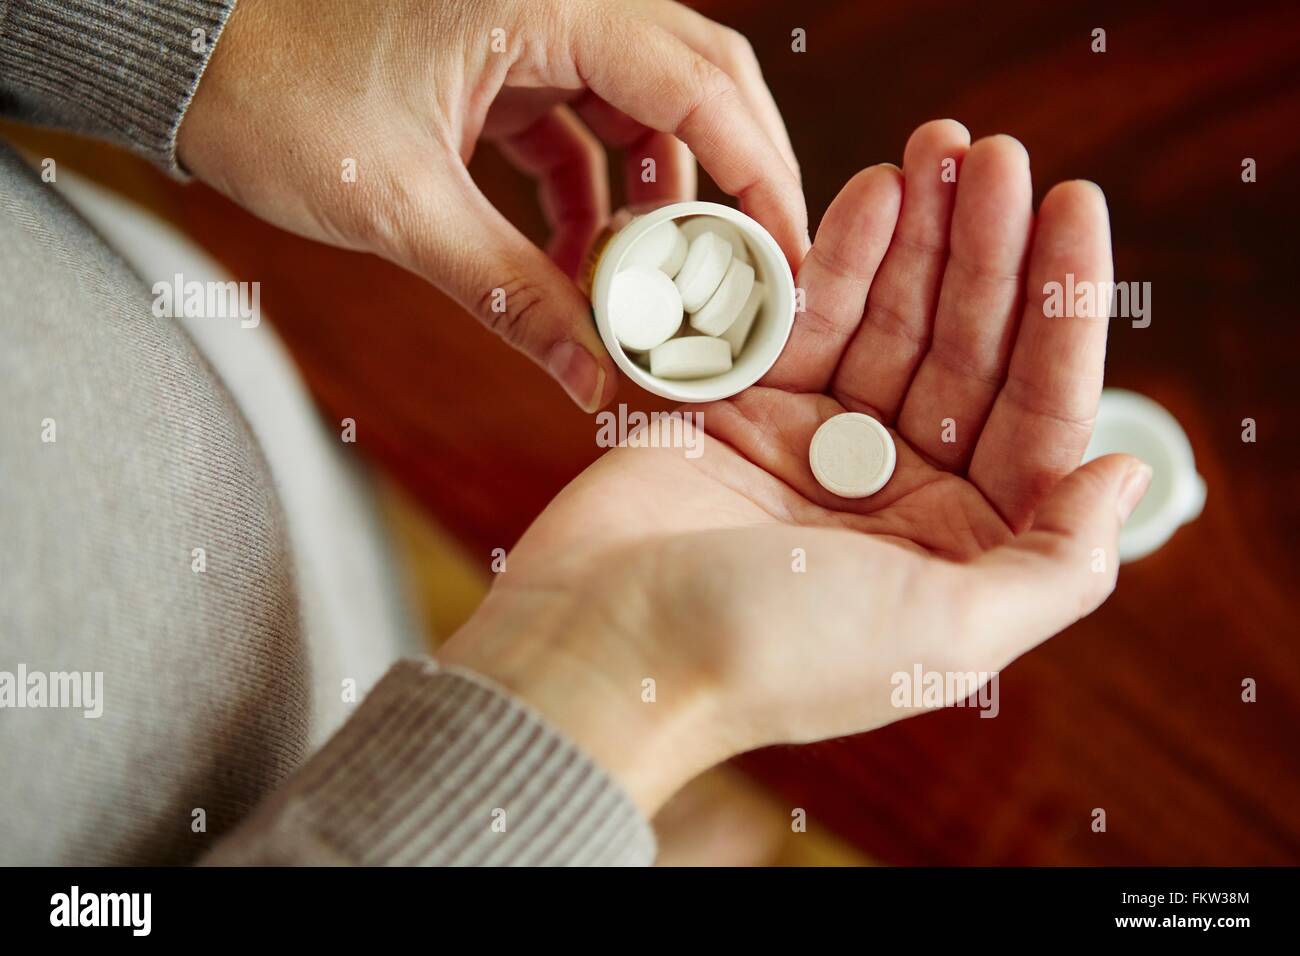 Giovane donna prendendo farmaci da vasca, close-up Foto Stock